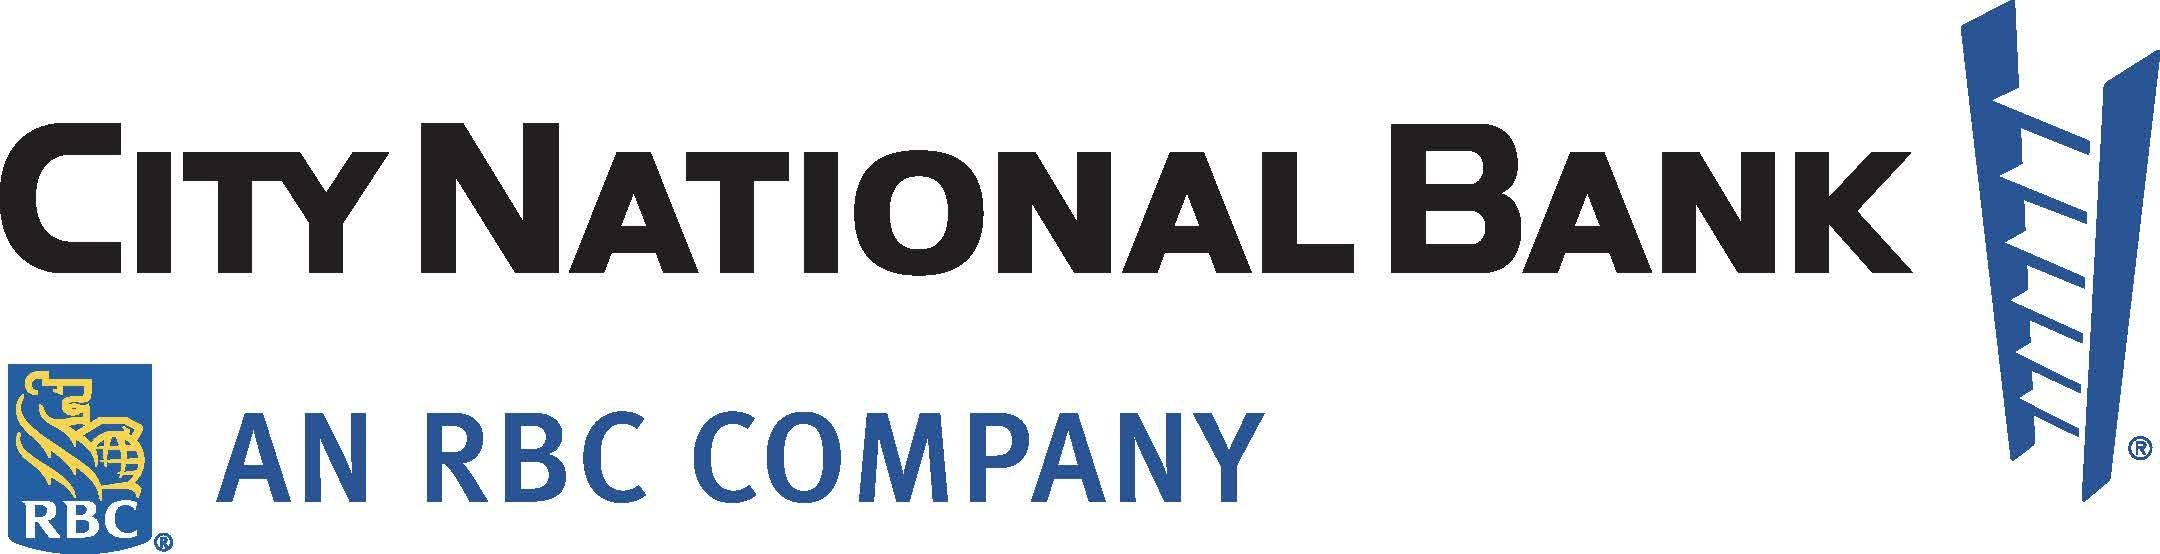 CNB-RBC Integrated Logo_Color_Alt (vector).jpg